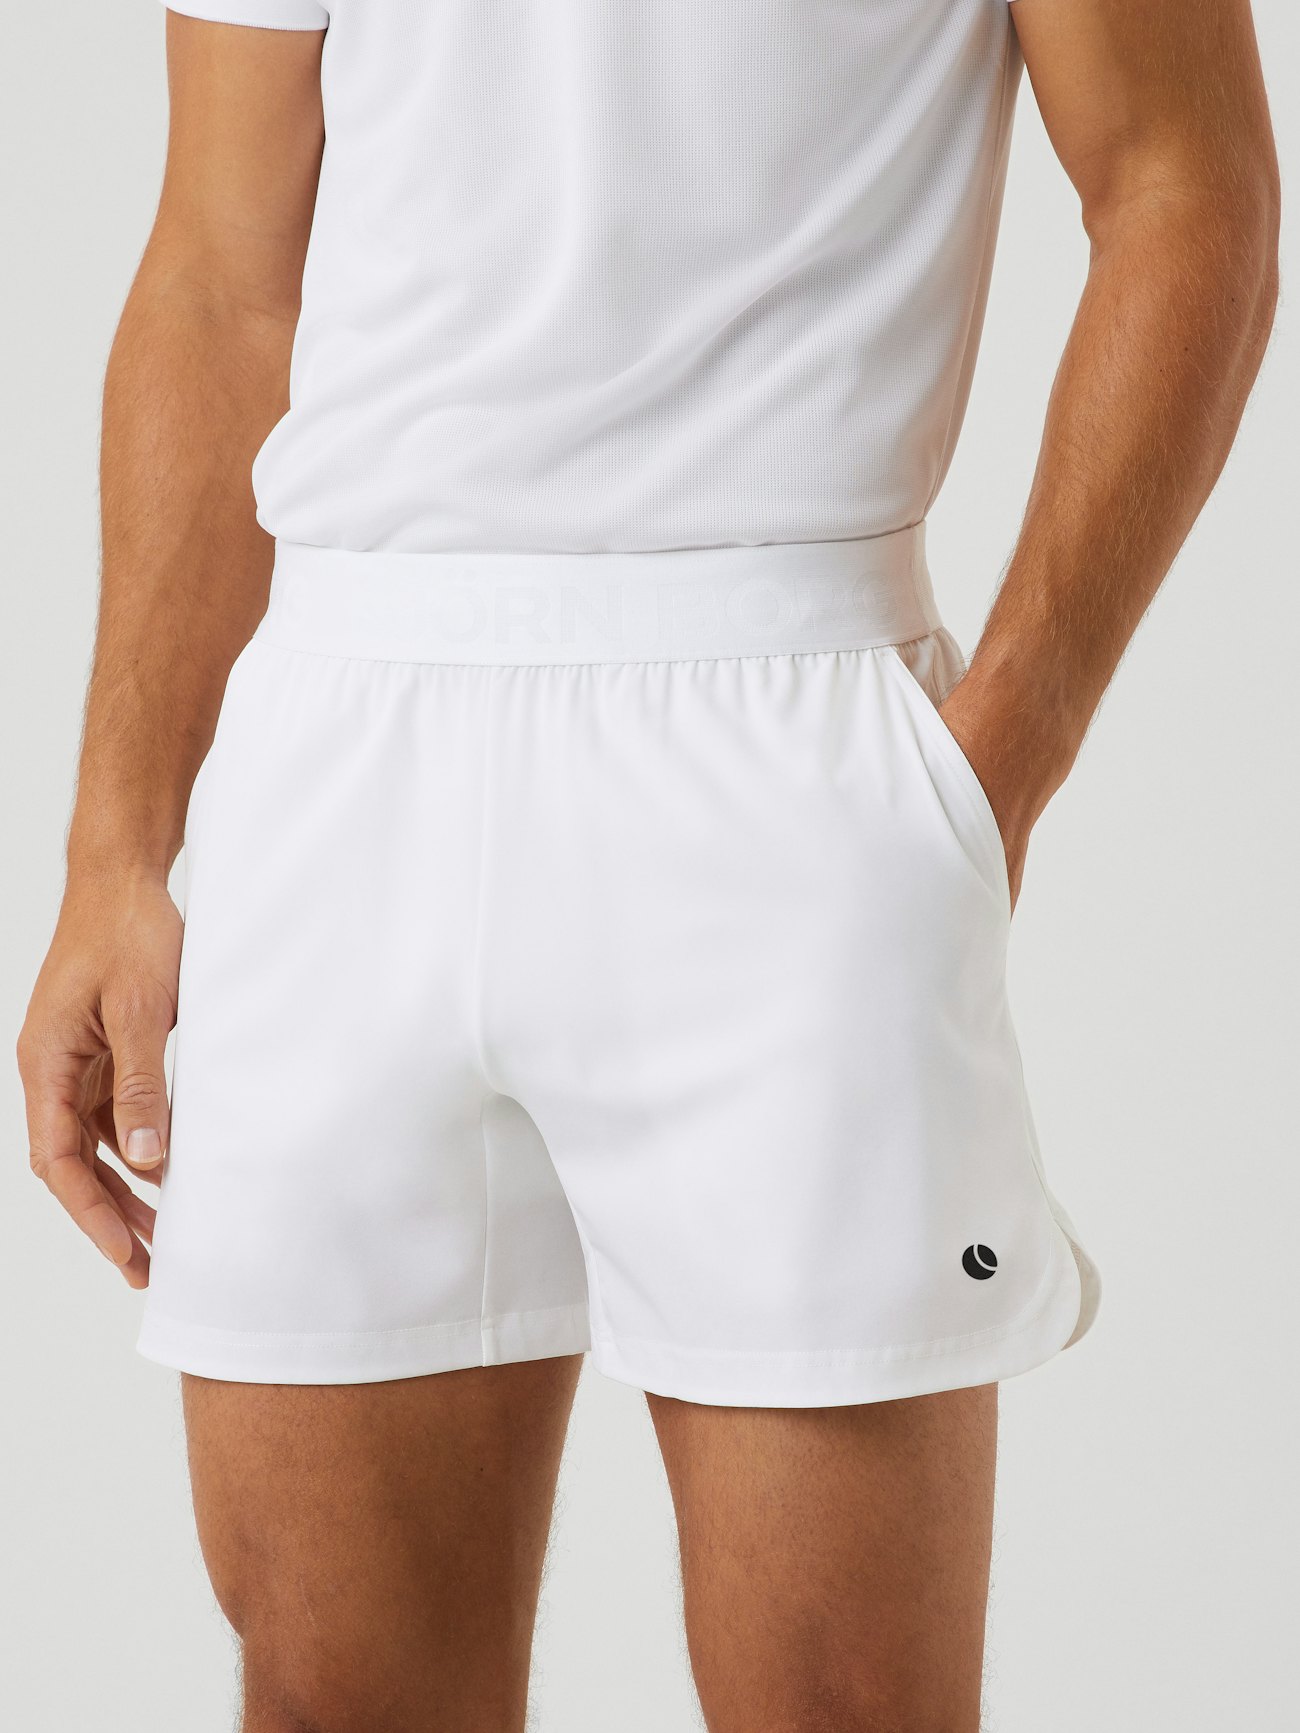 Ace Short Shorts - Brilliant White